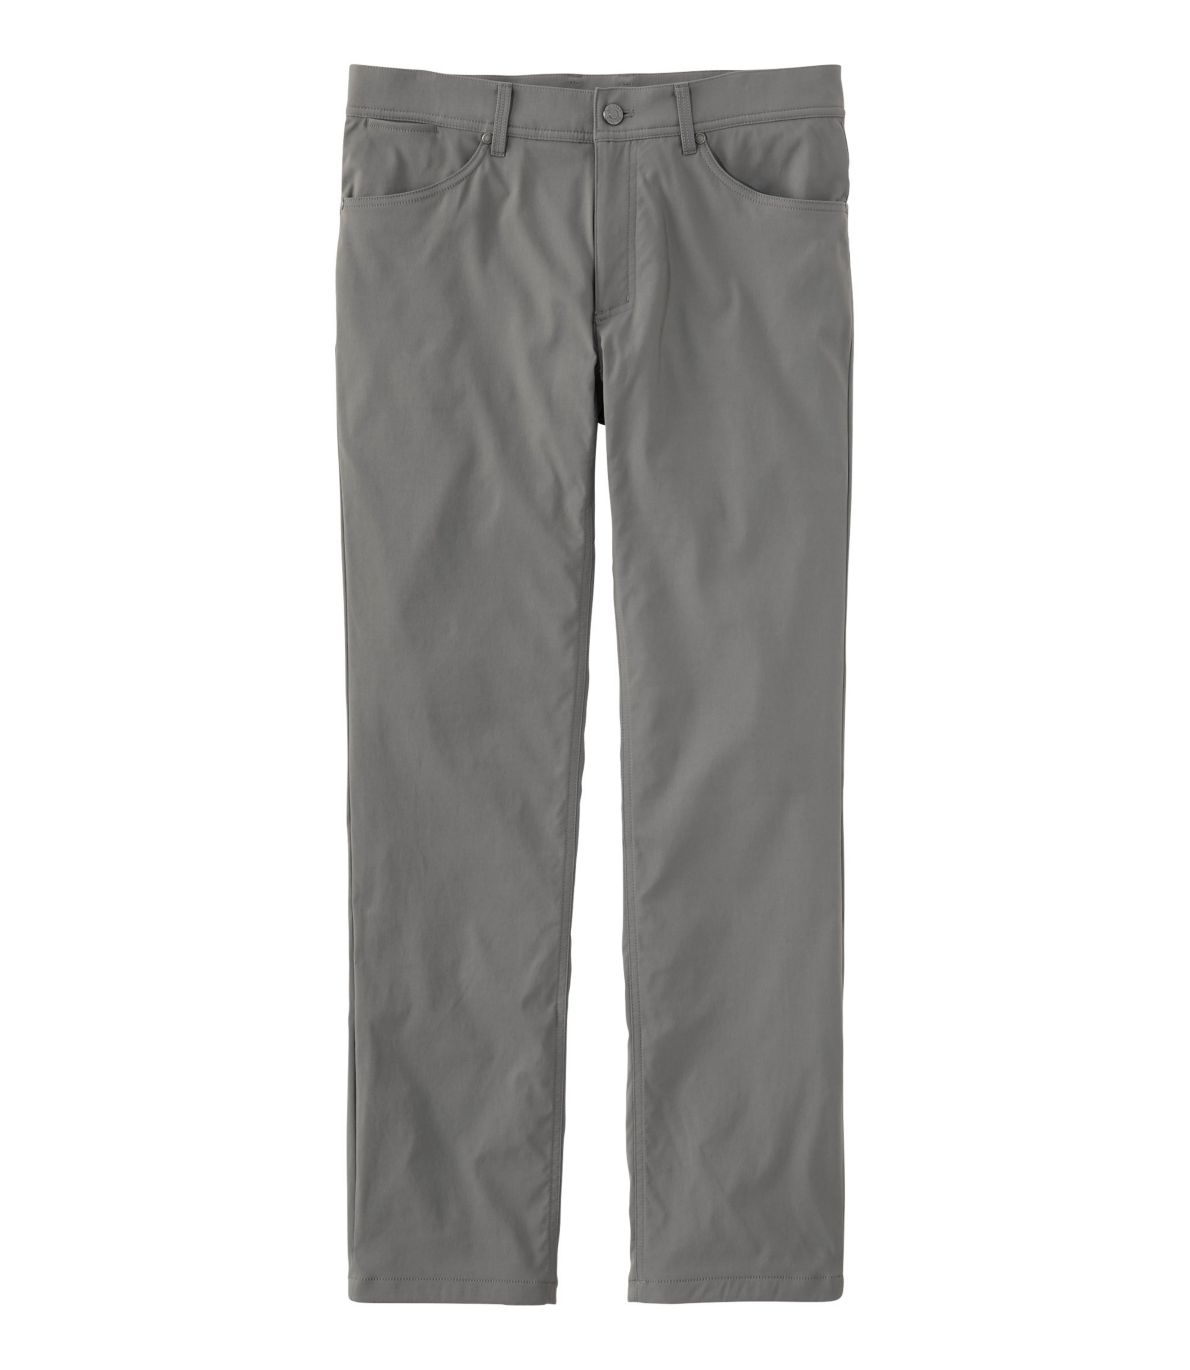 Men's VentureStretch Five-Pocket Pants, Standard Fit, Lined at L.L. Bean